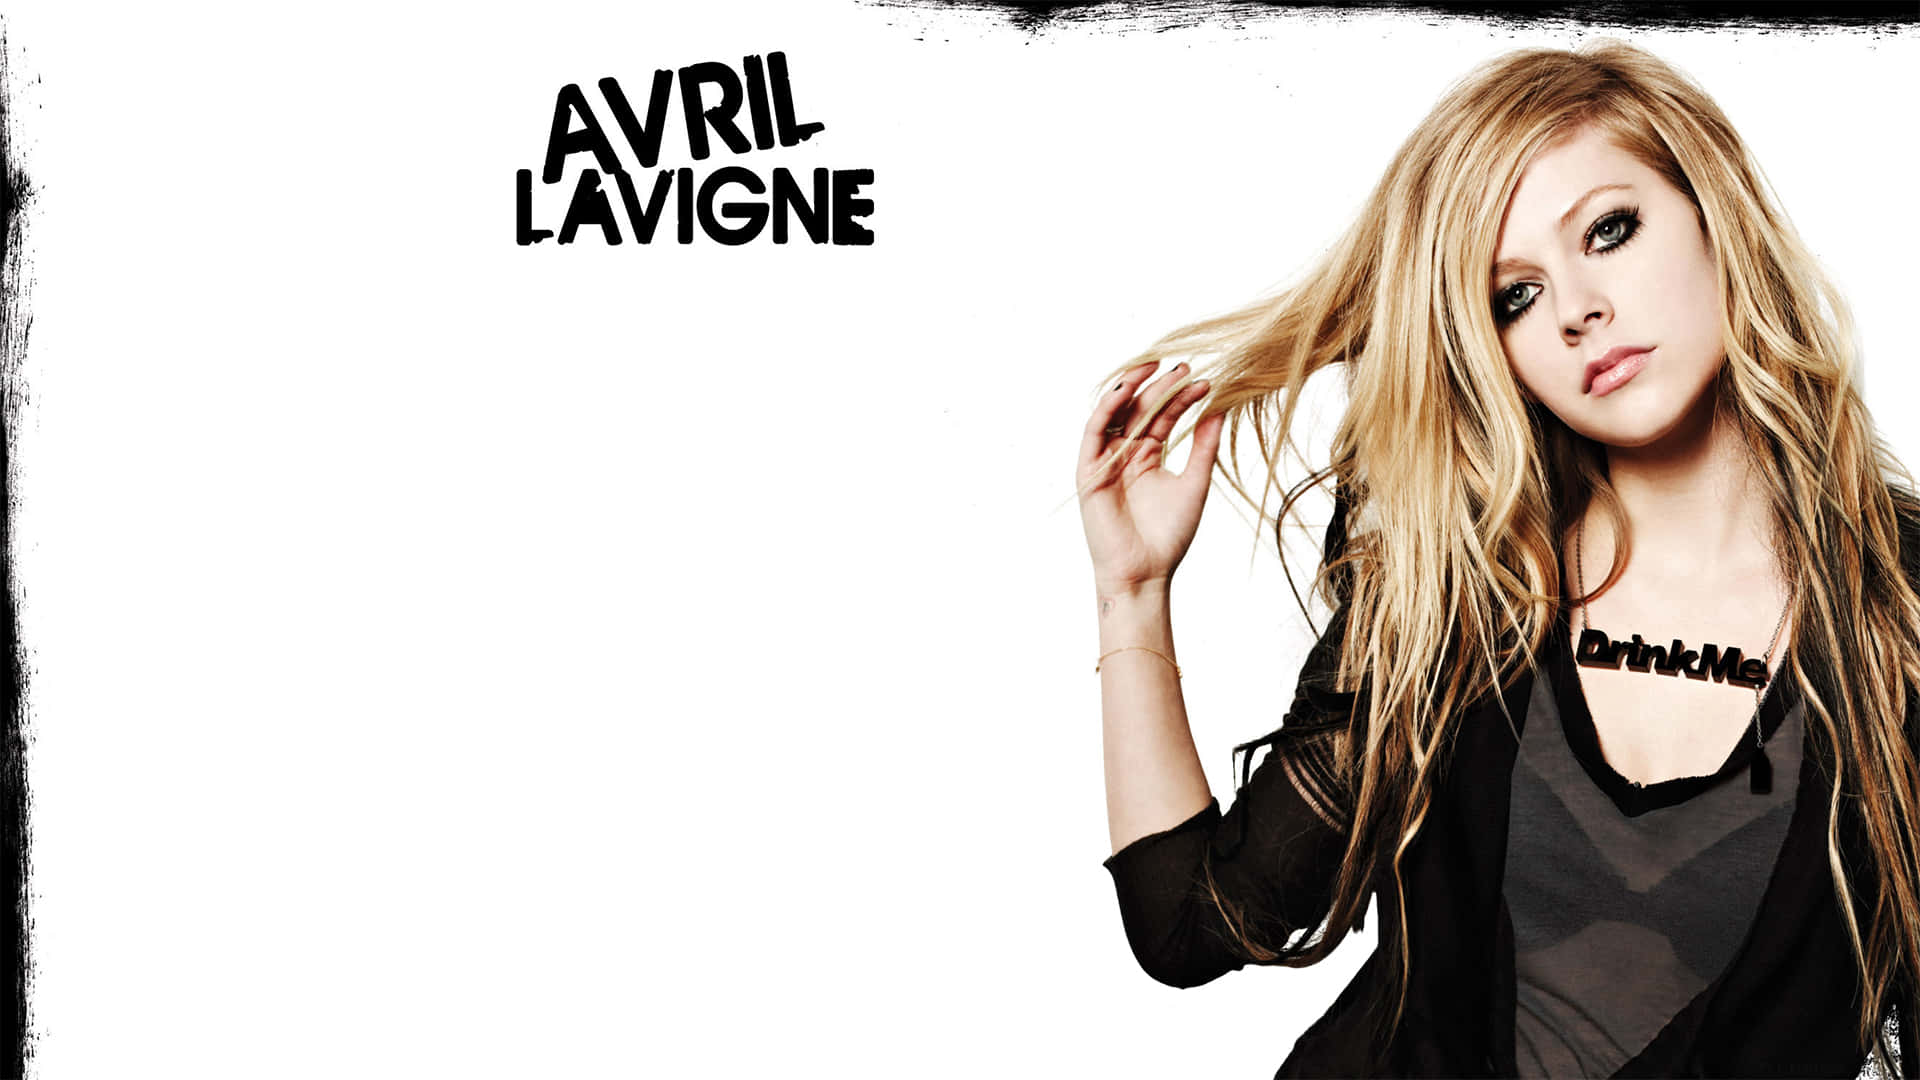 Multi-talented singer-songwriter and artist, Avril Lavigne